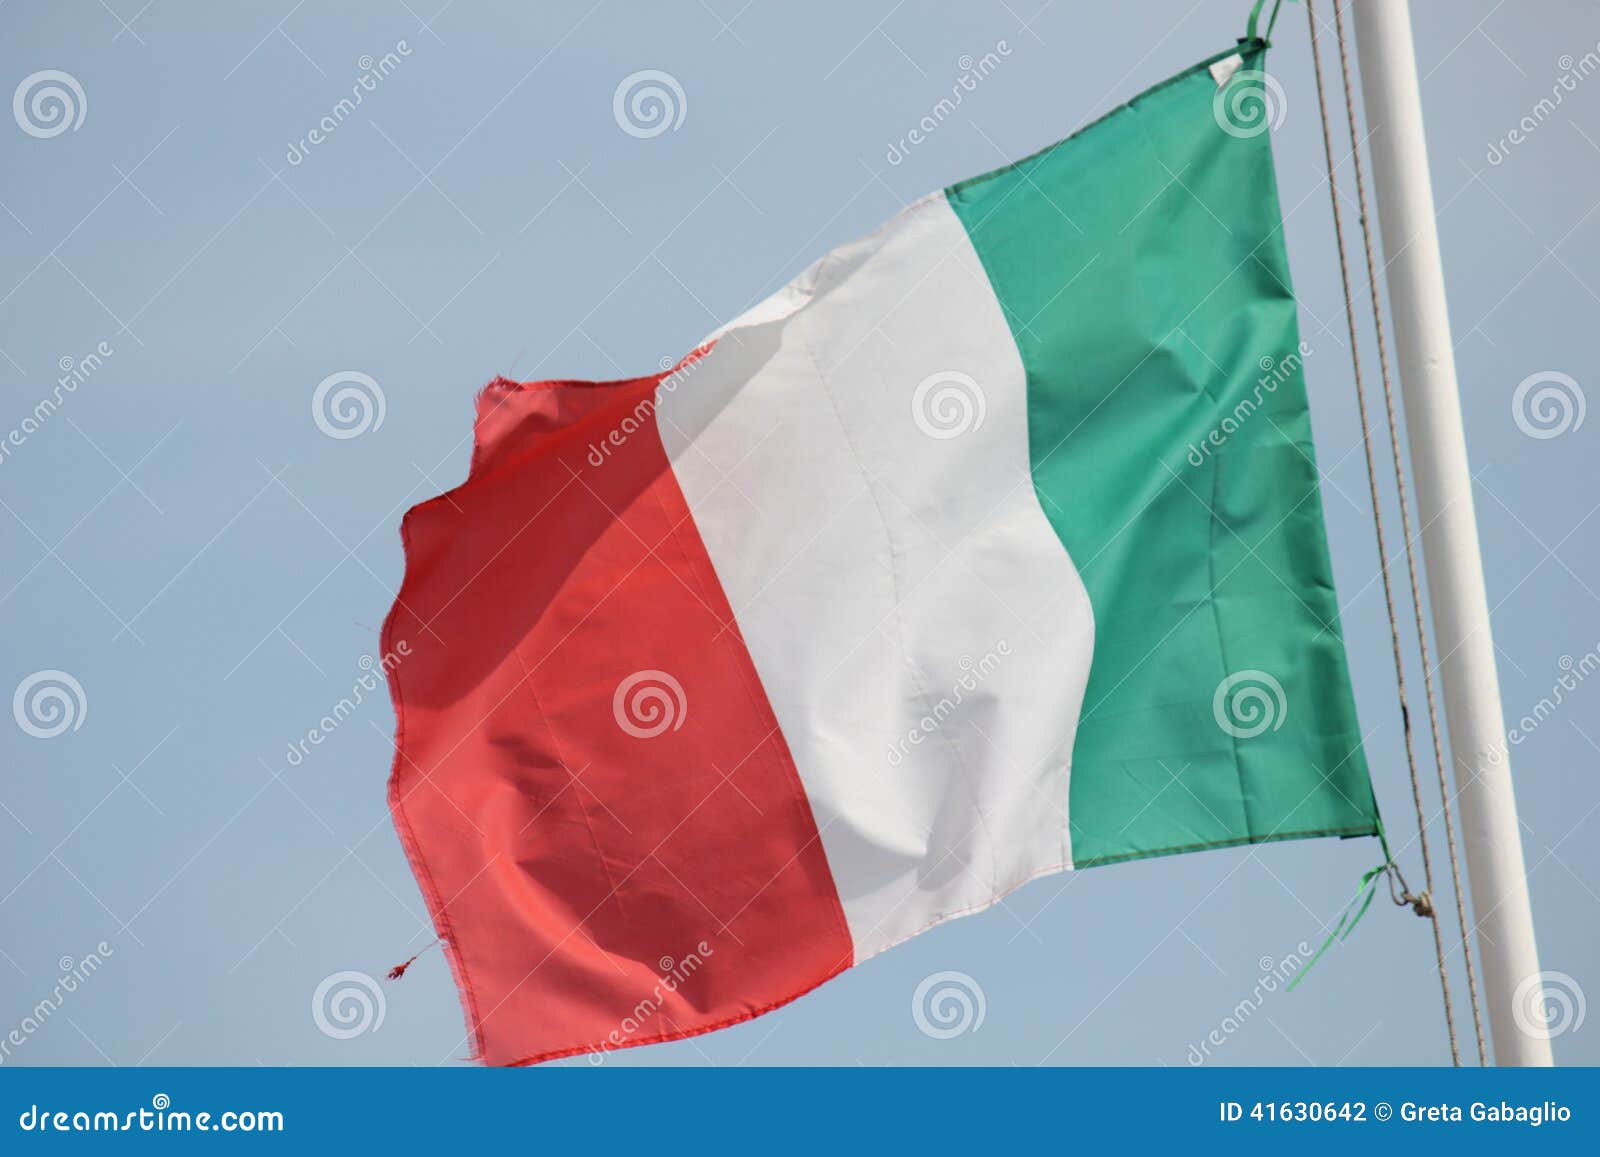 italian flag (tricolore)